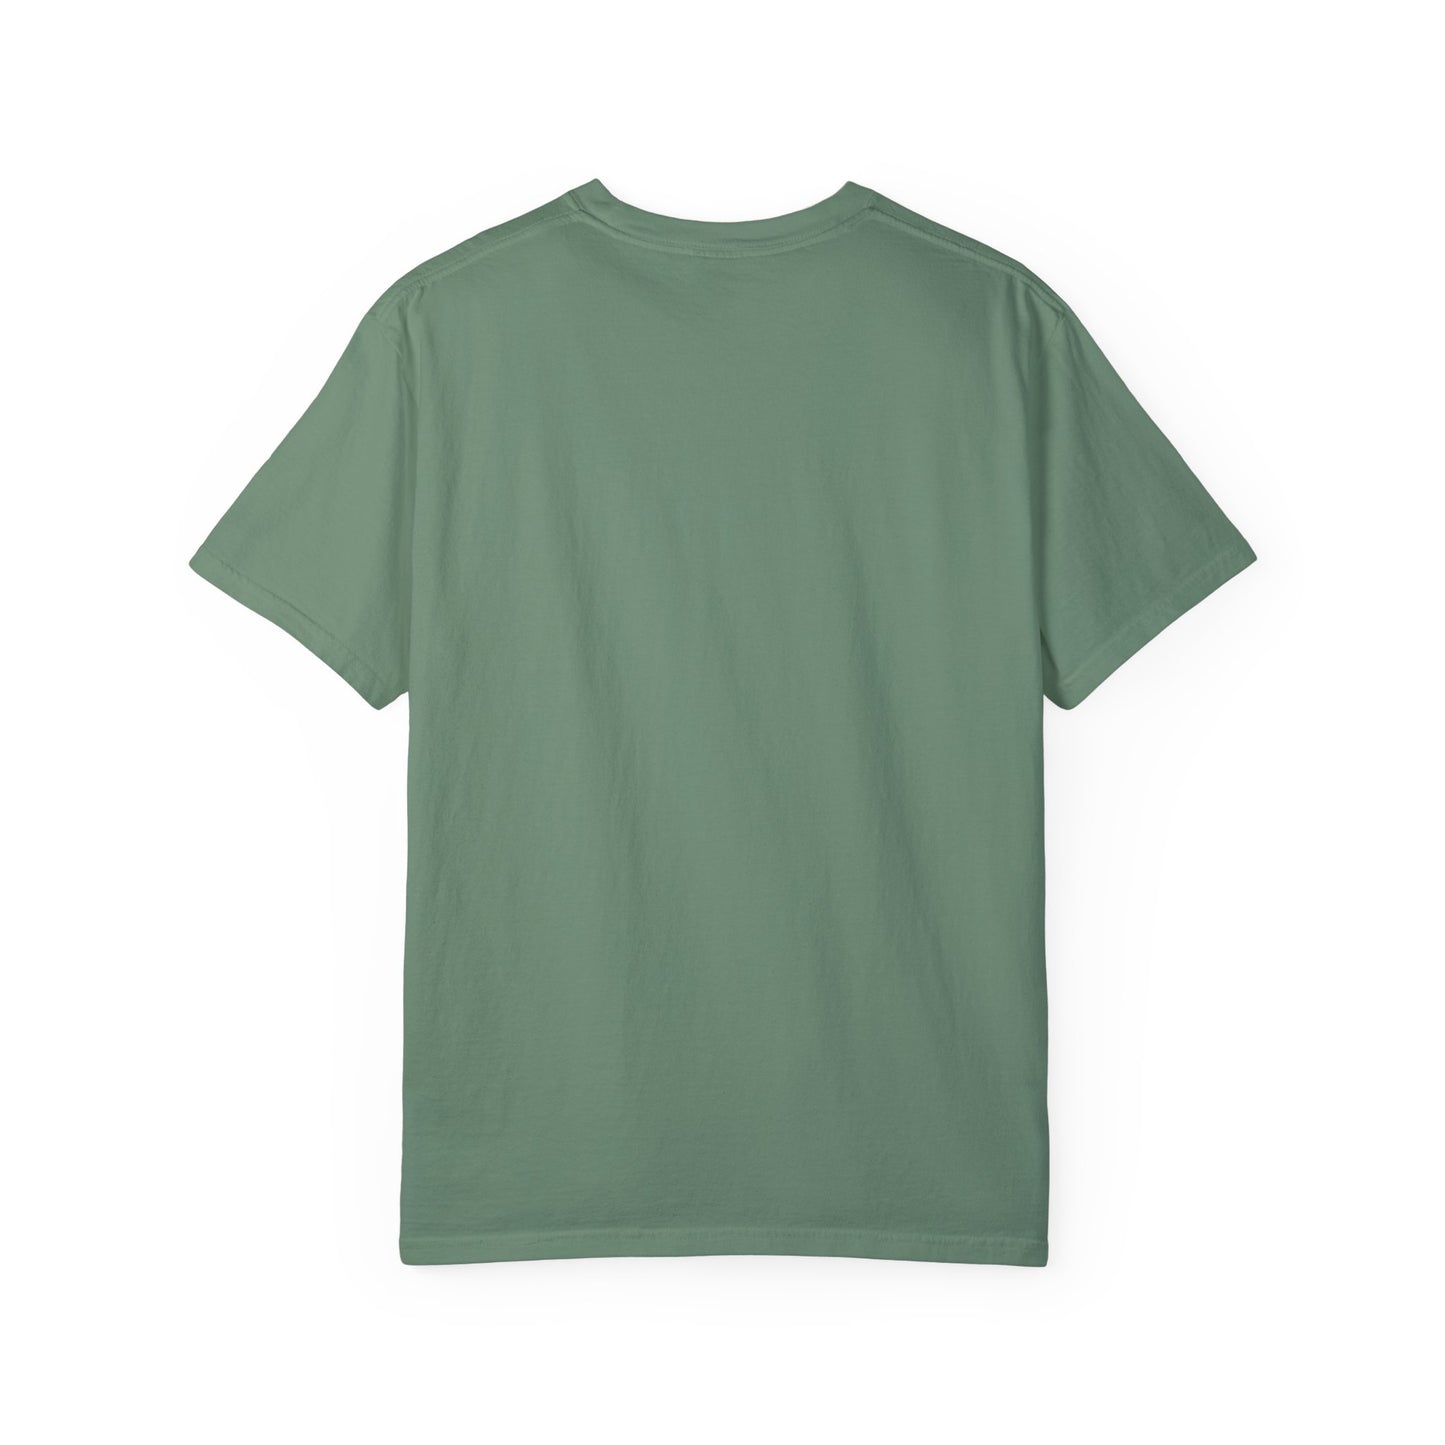 My life feels like a test - Unisex Garment-Dyed T-shirt